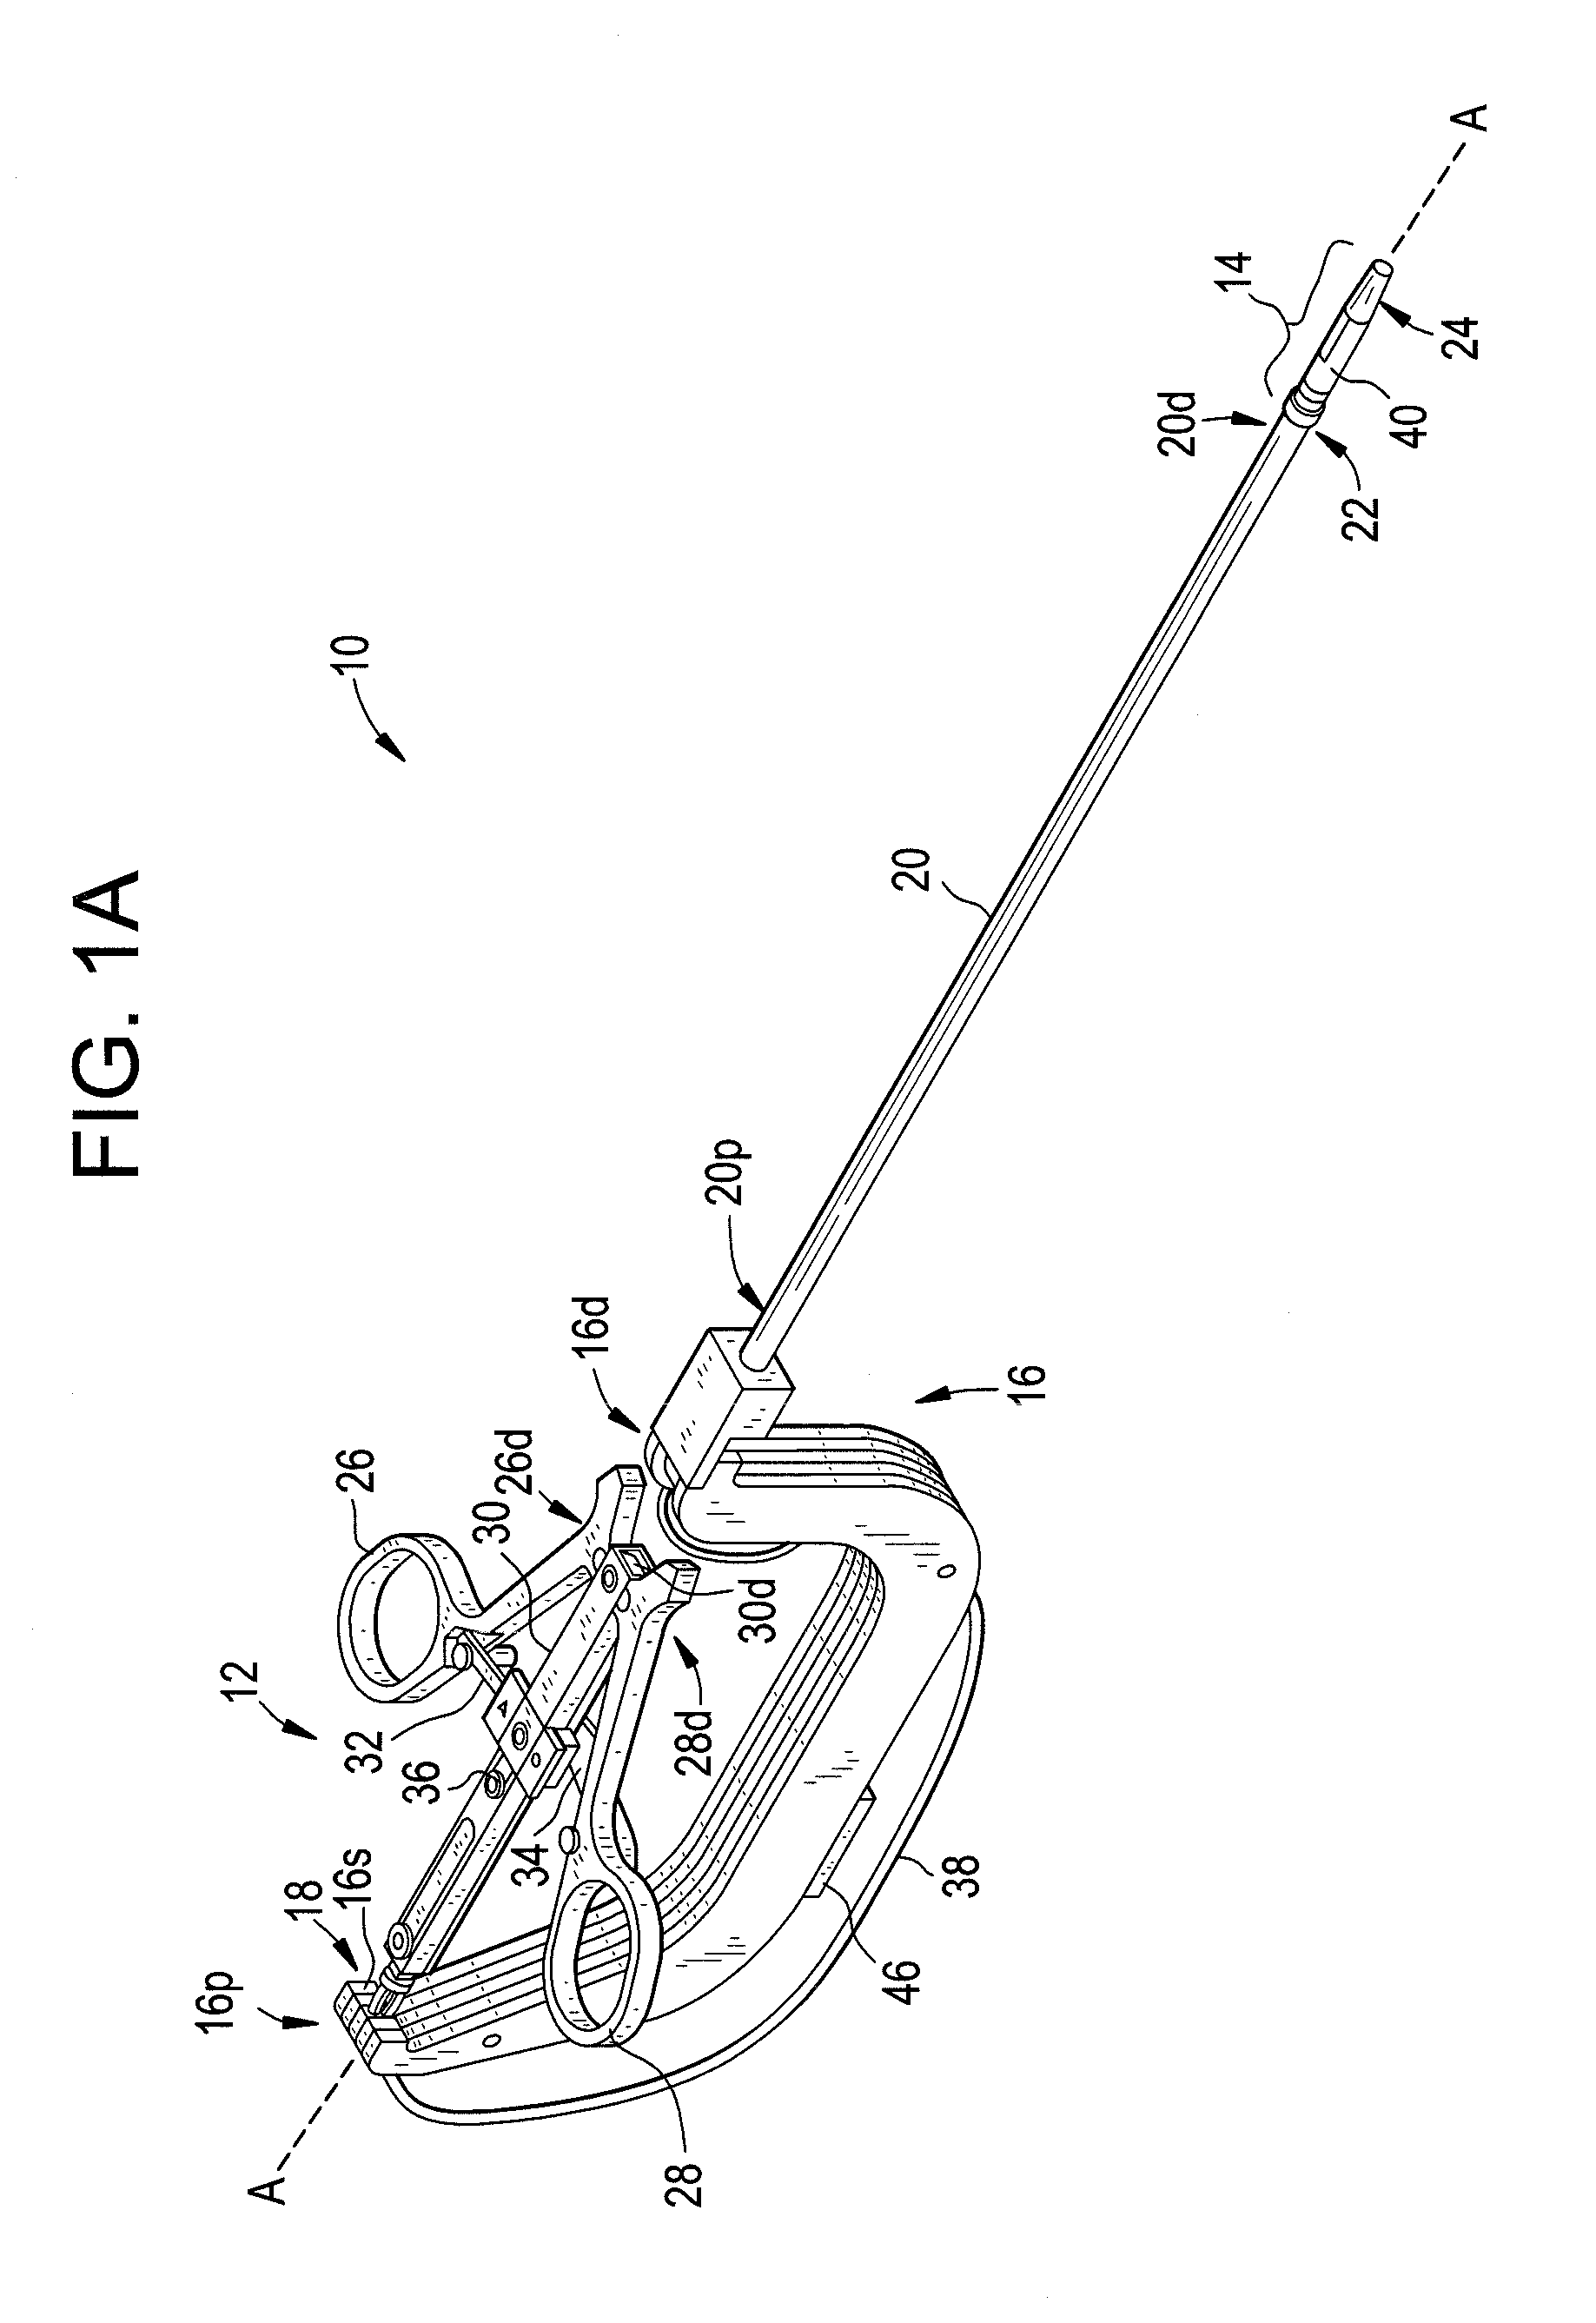 Laparoscopic device with distal handle